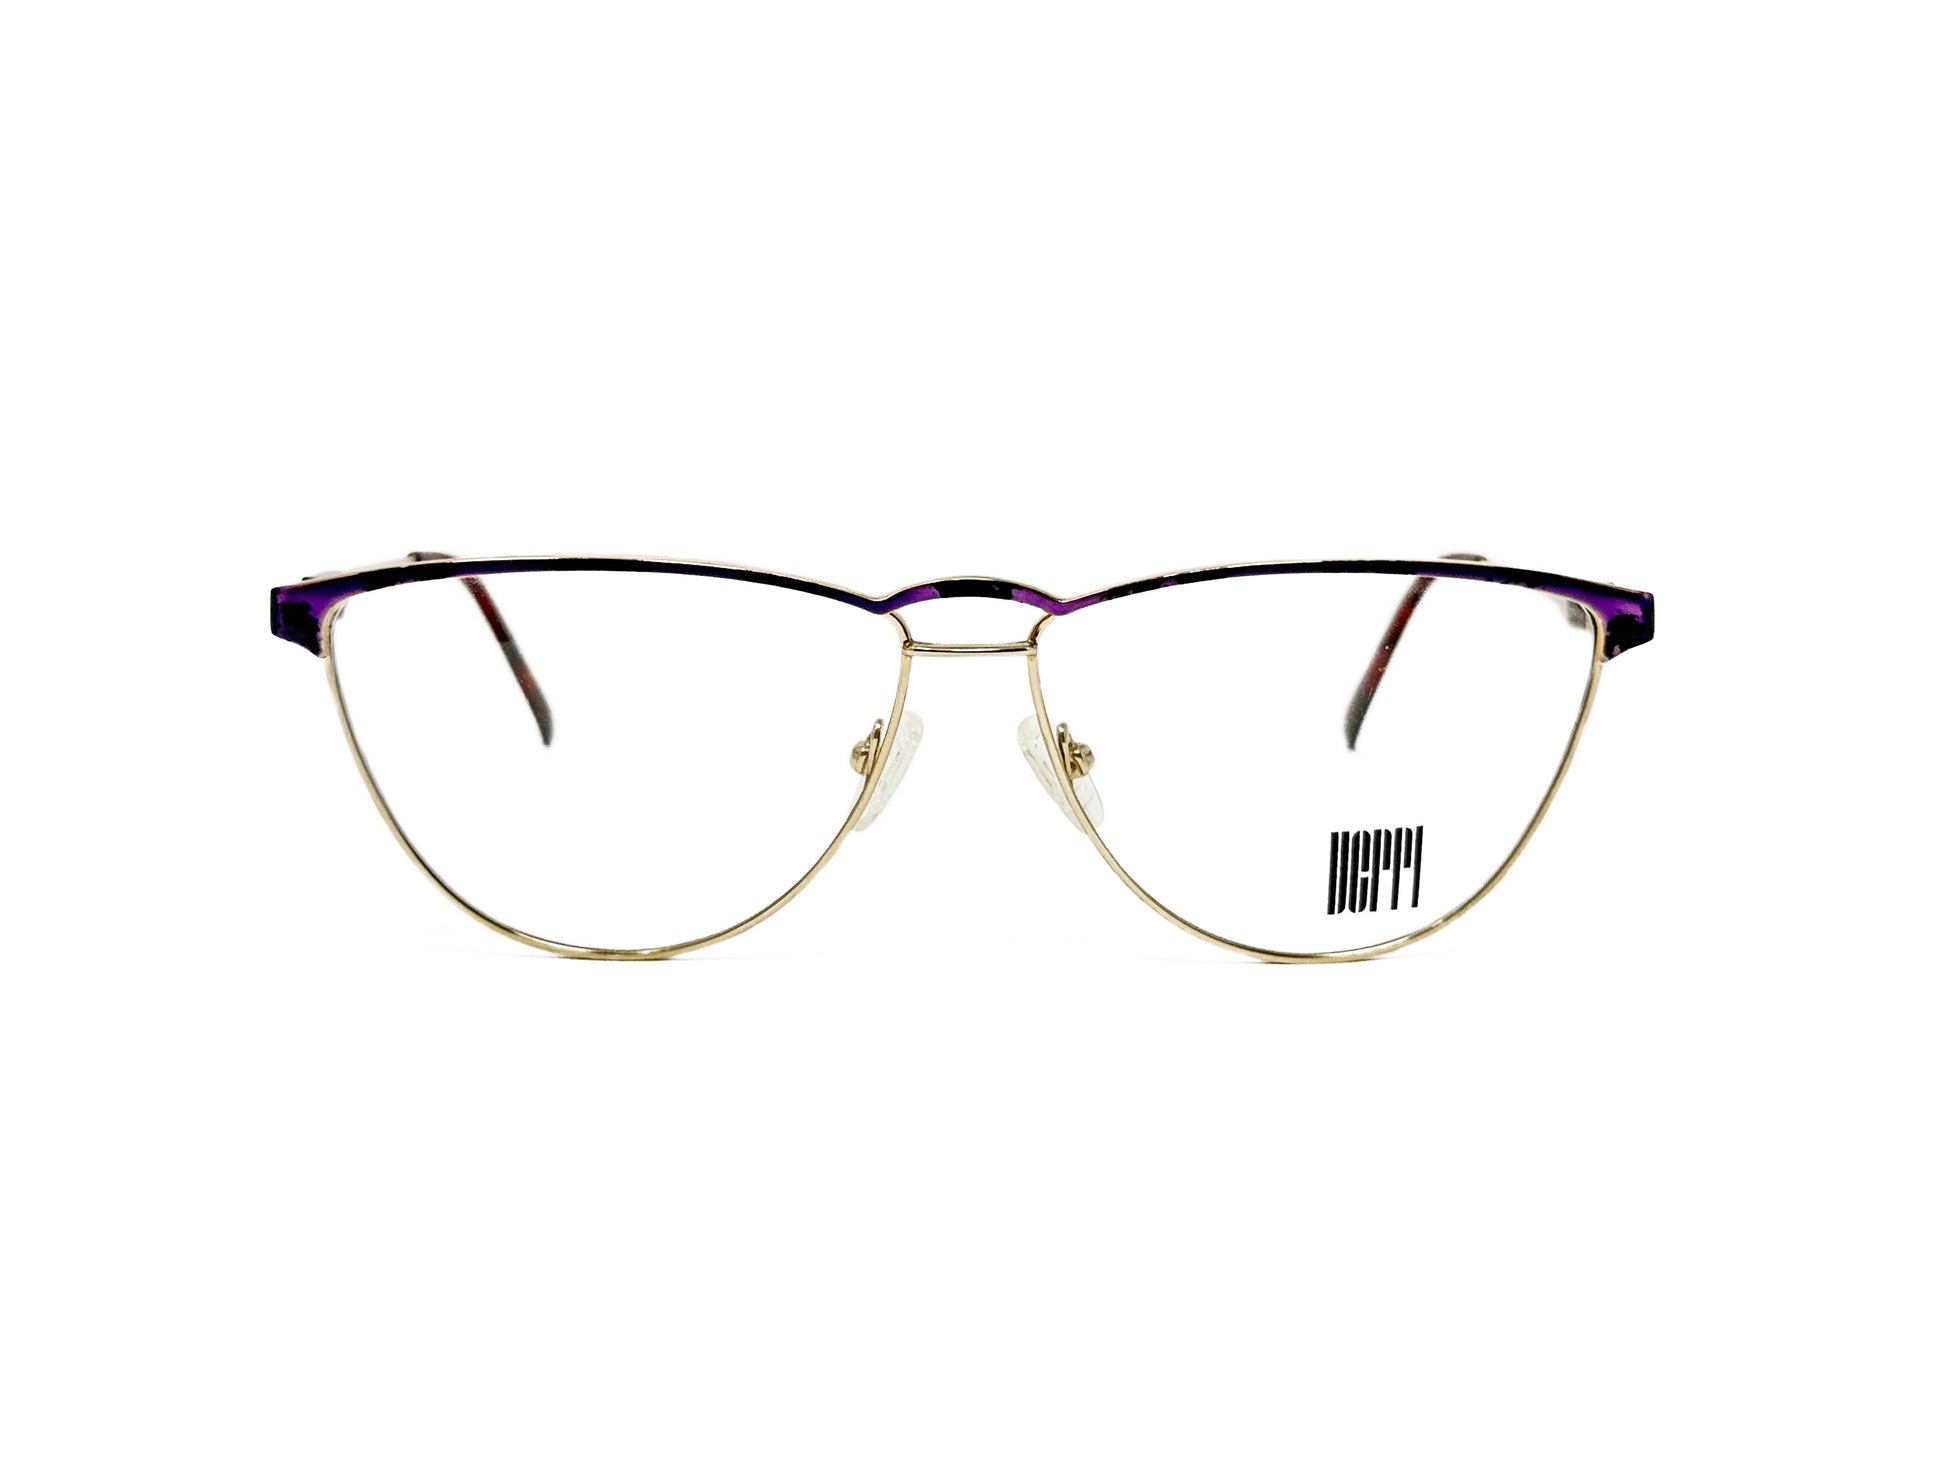 Derri rounded-triangular, metal, optical frame. Model: 9702. Color: G-W - Gold violet. Front view.